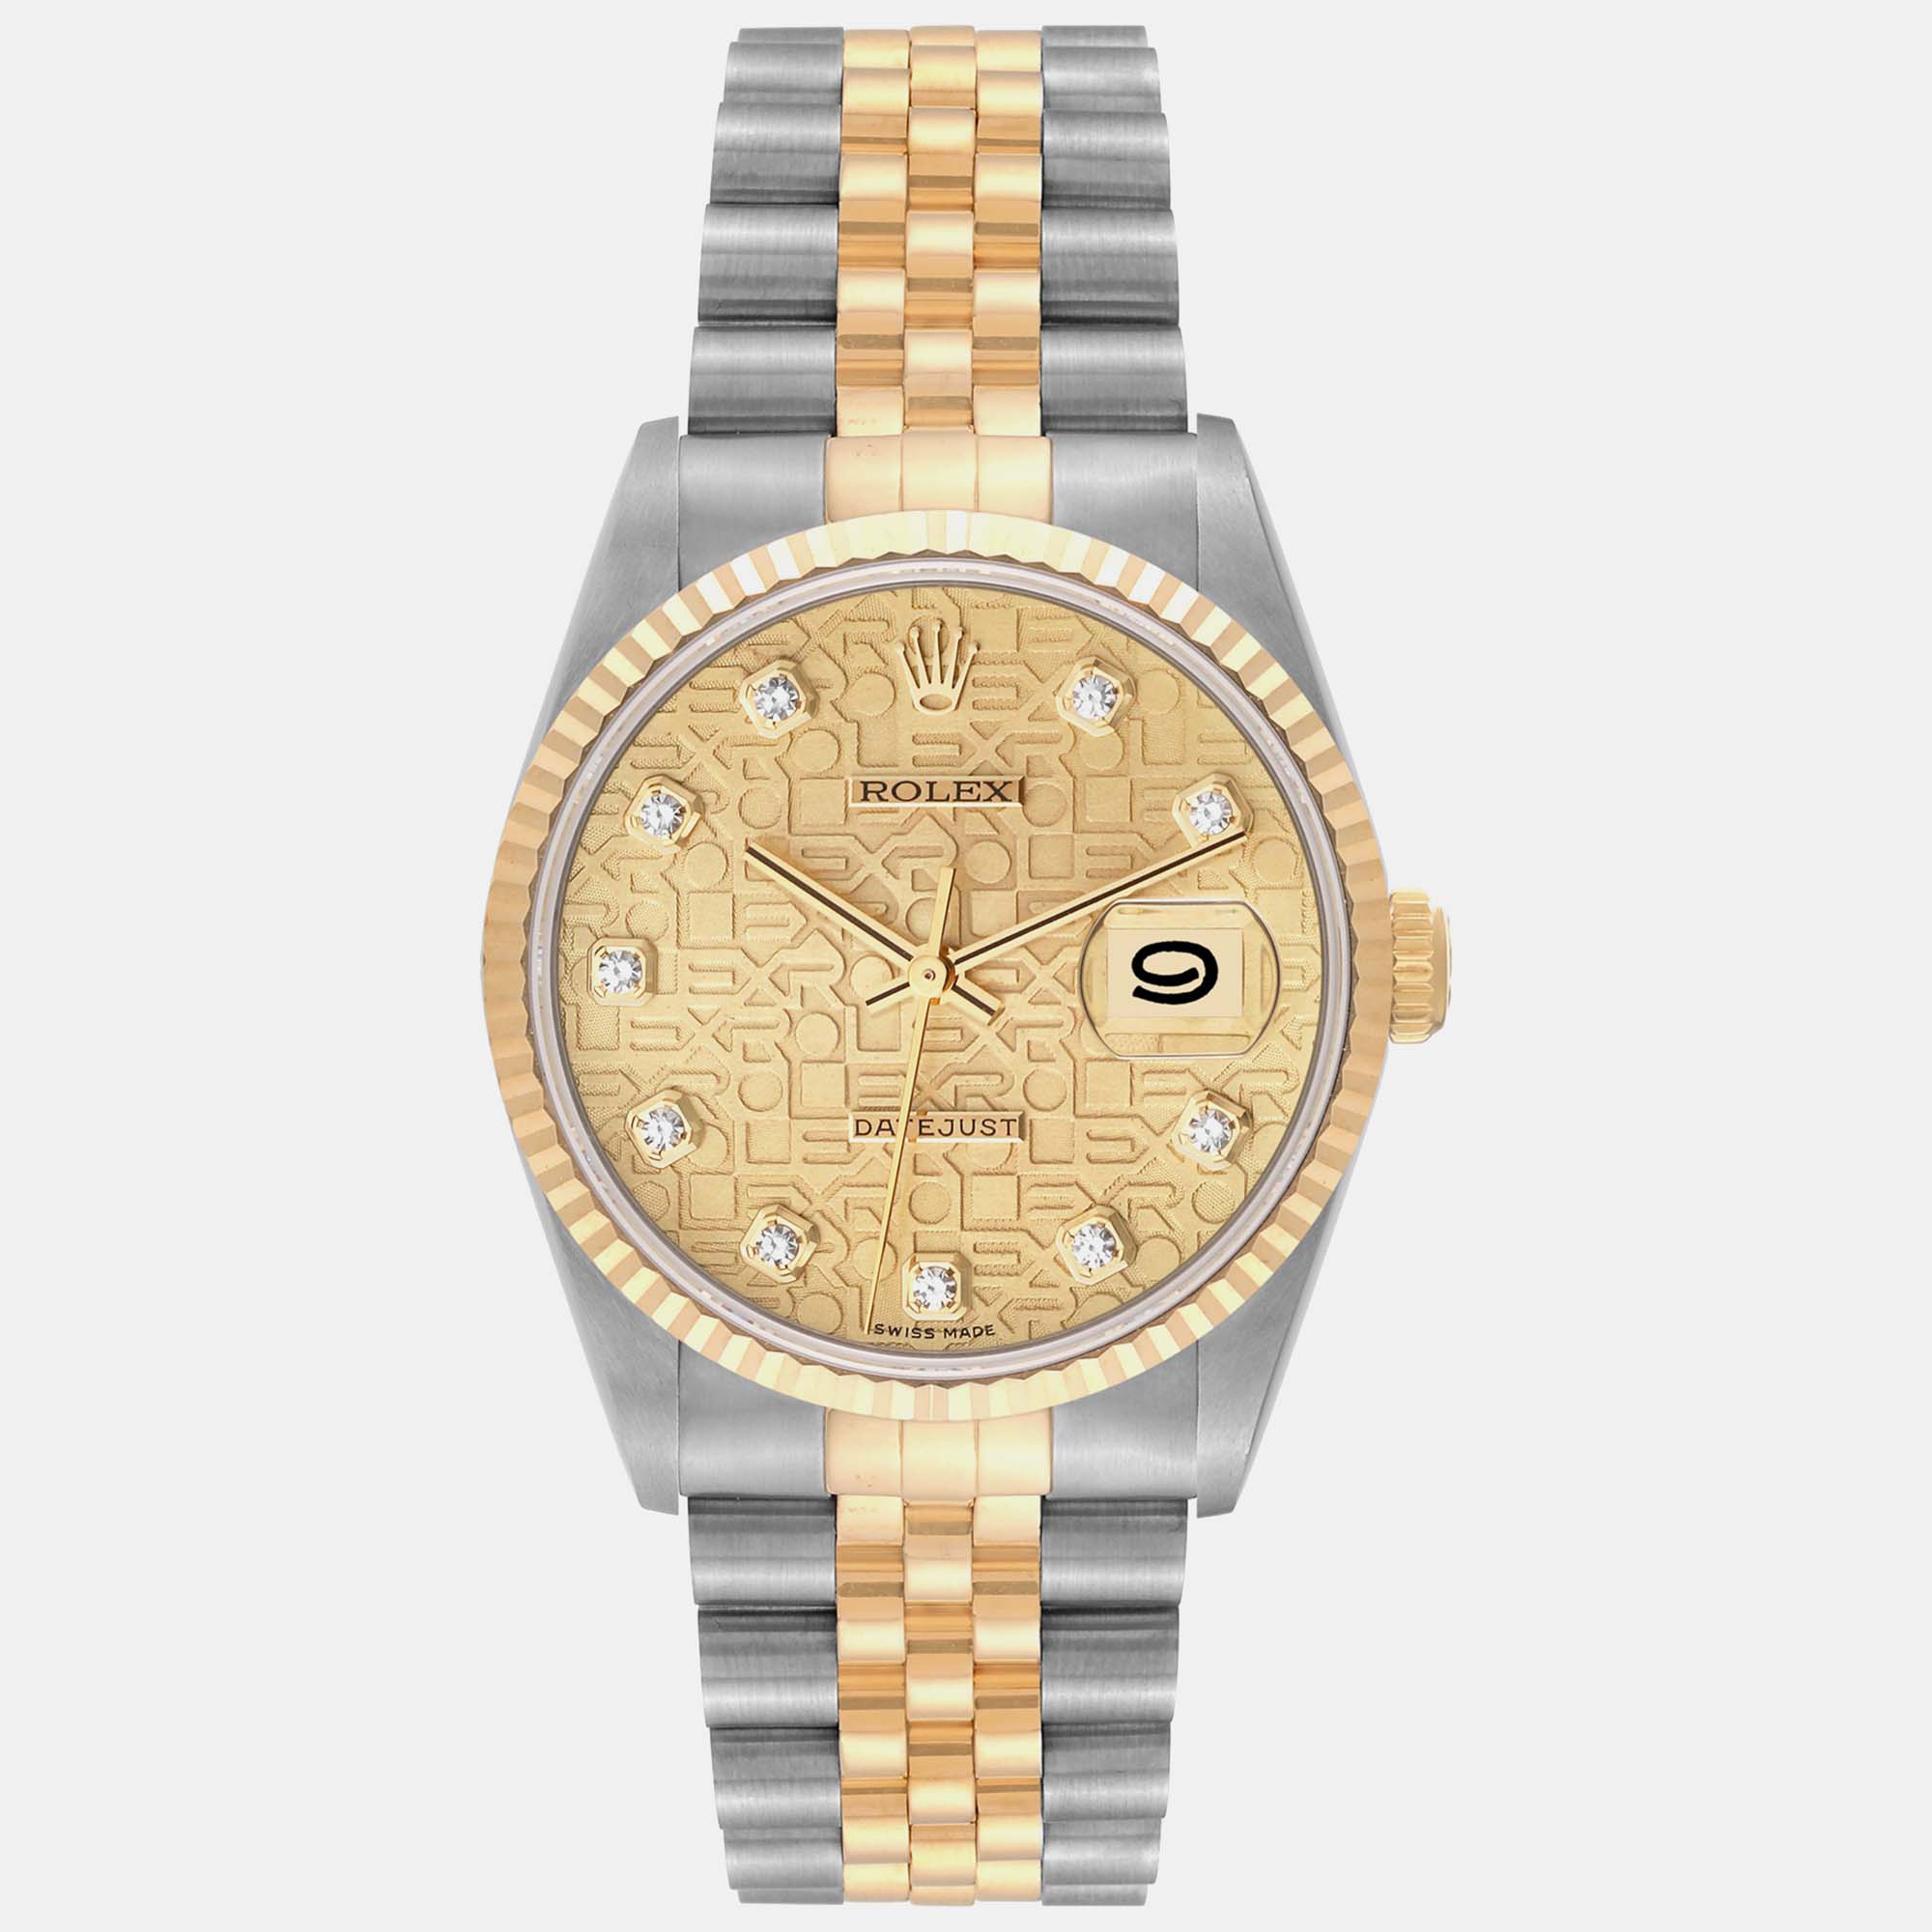 Rolex datejust anniversary diamond dial steel yellow gold men's watch 36 mm